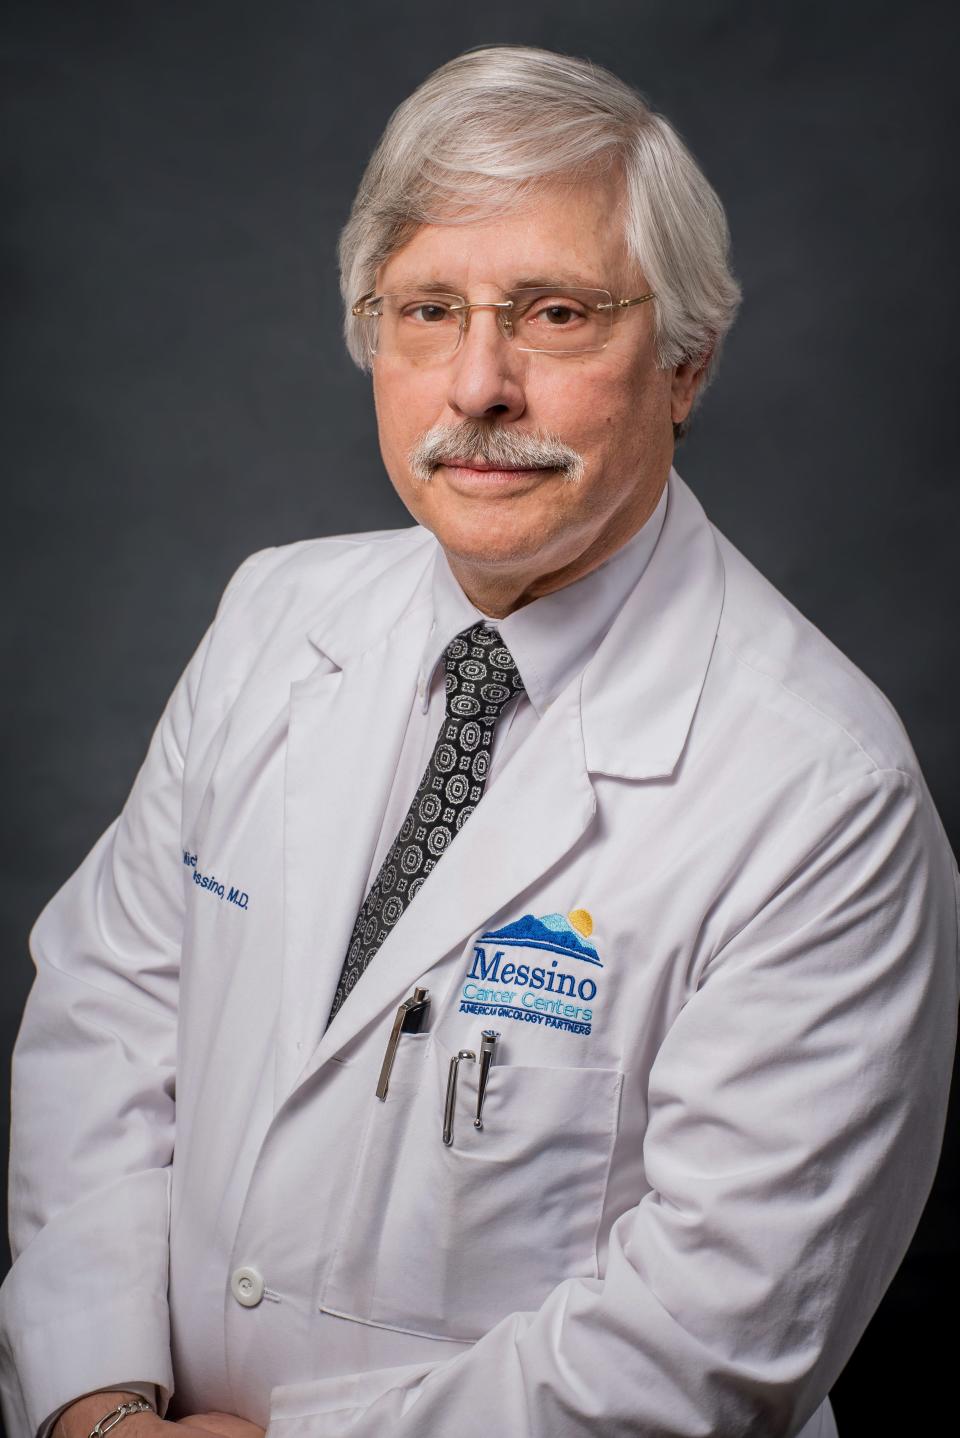 Dr. Michael Messino